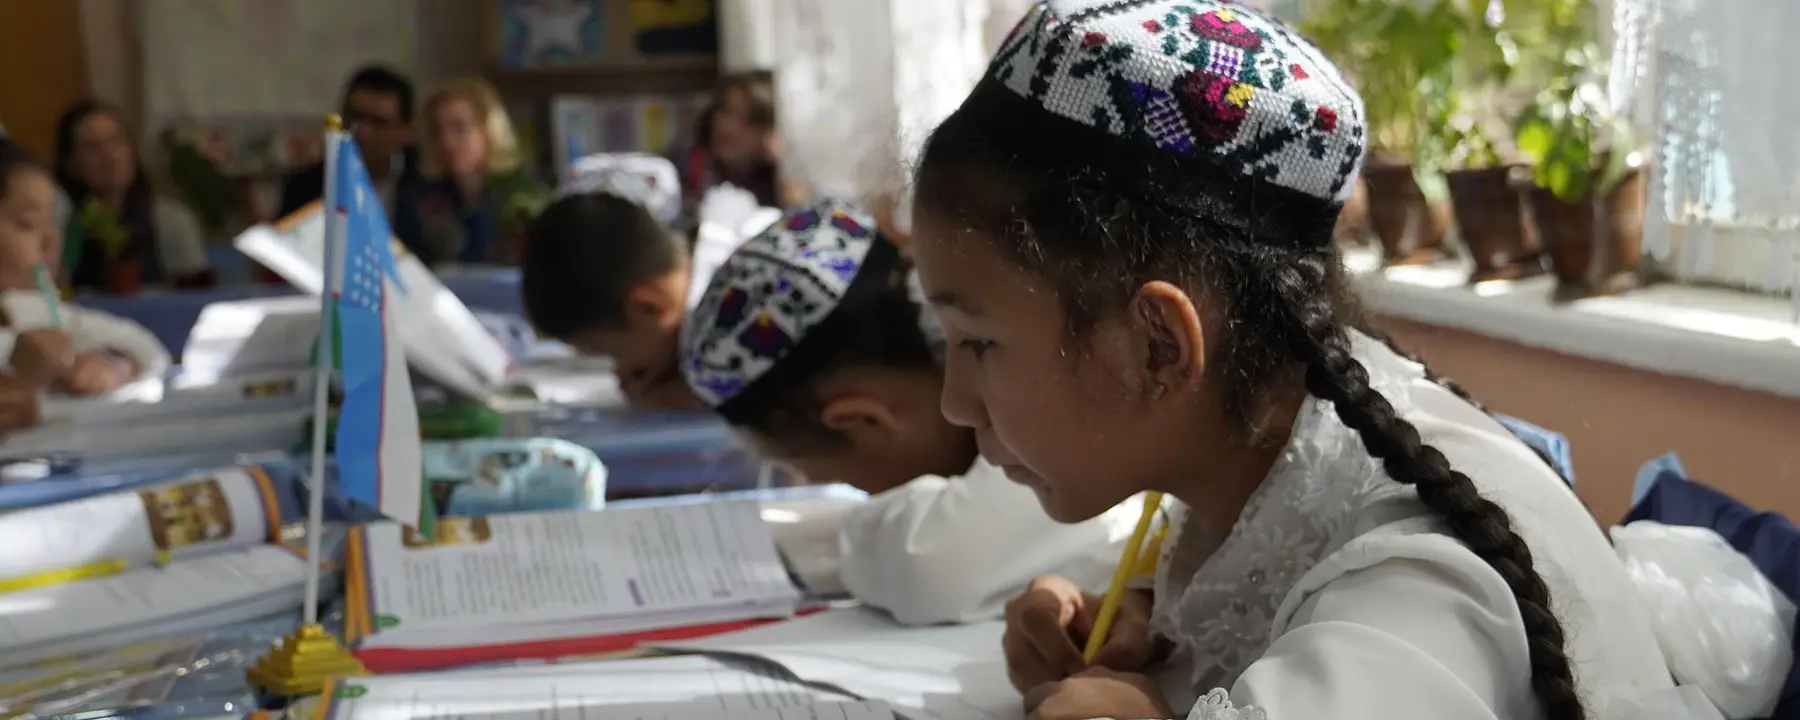 A girl practices reading in her classroom in Uzbekistan.